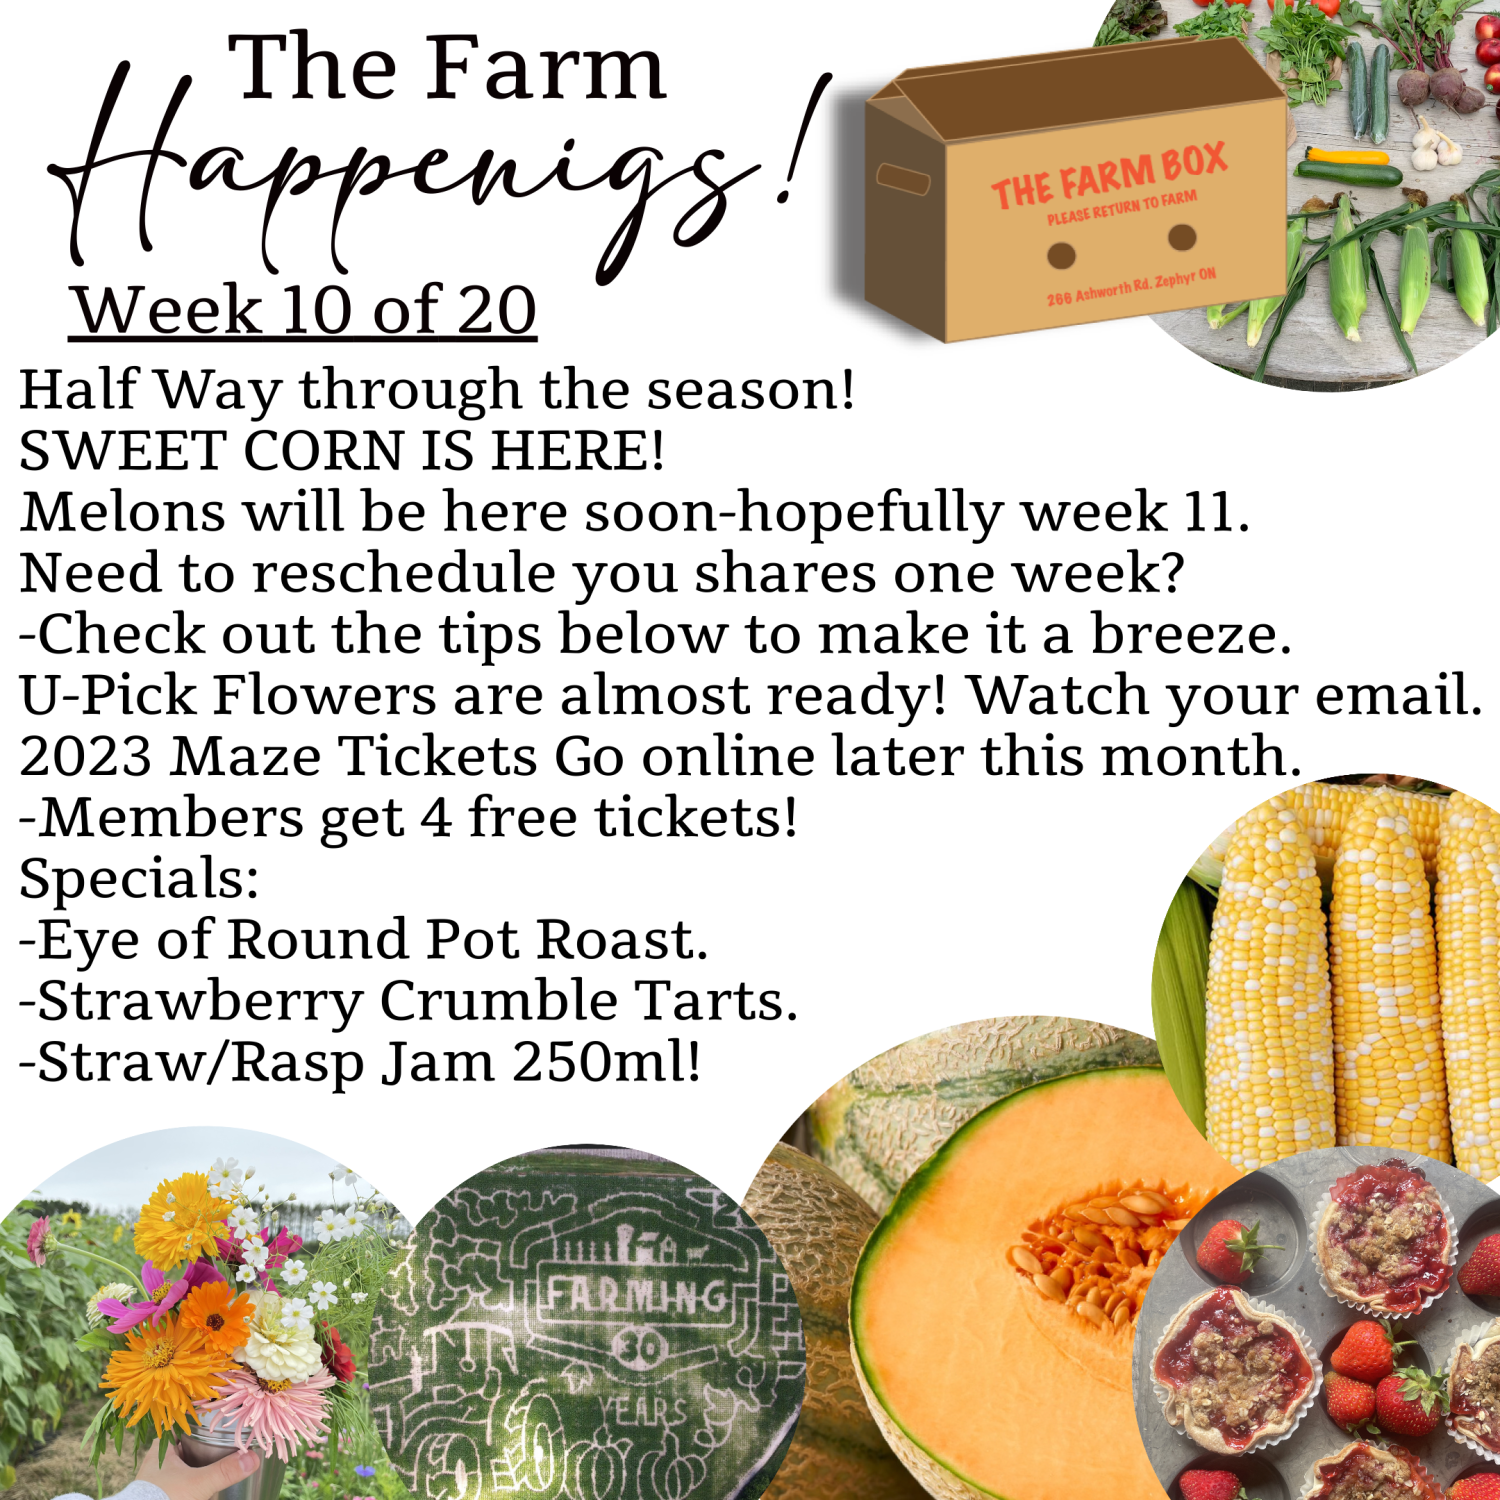 Previous Happening: "The Farm Box"-Coopers CSA Farm Farm Happenings Week 10